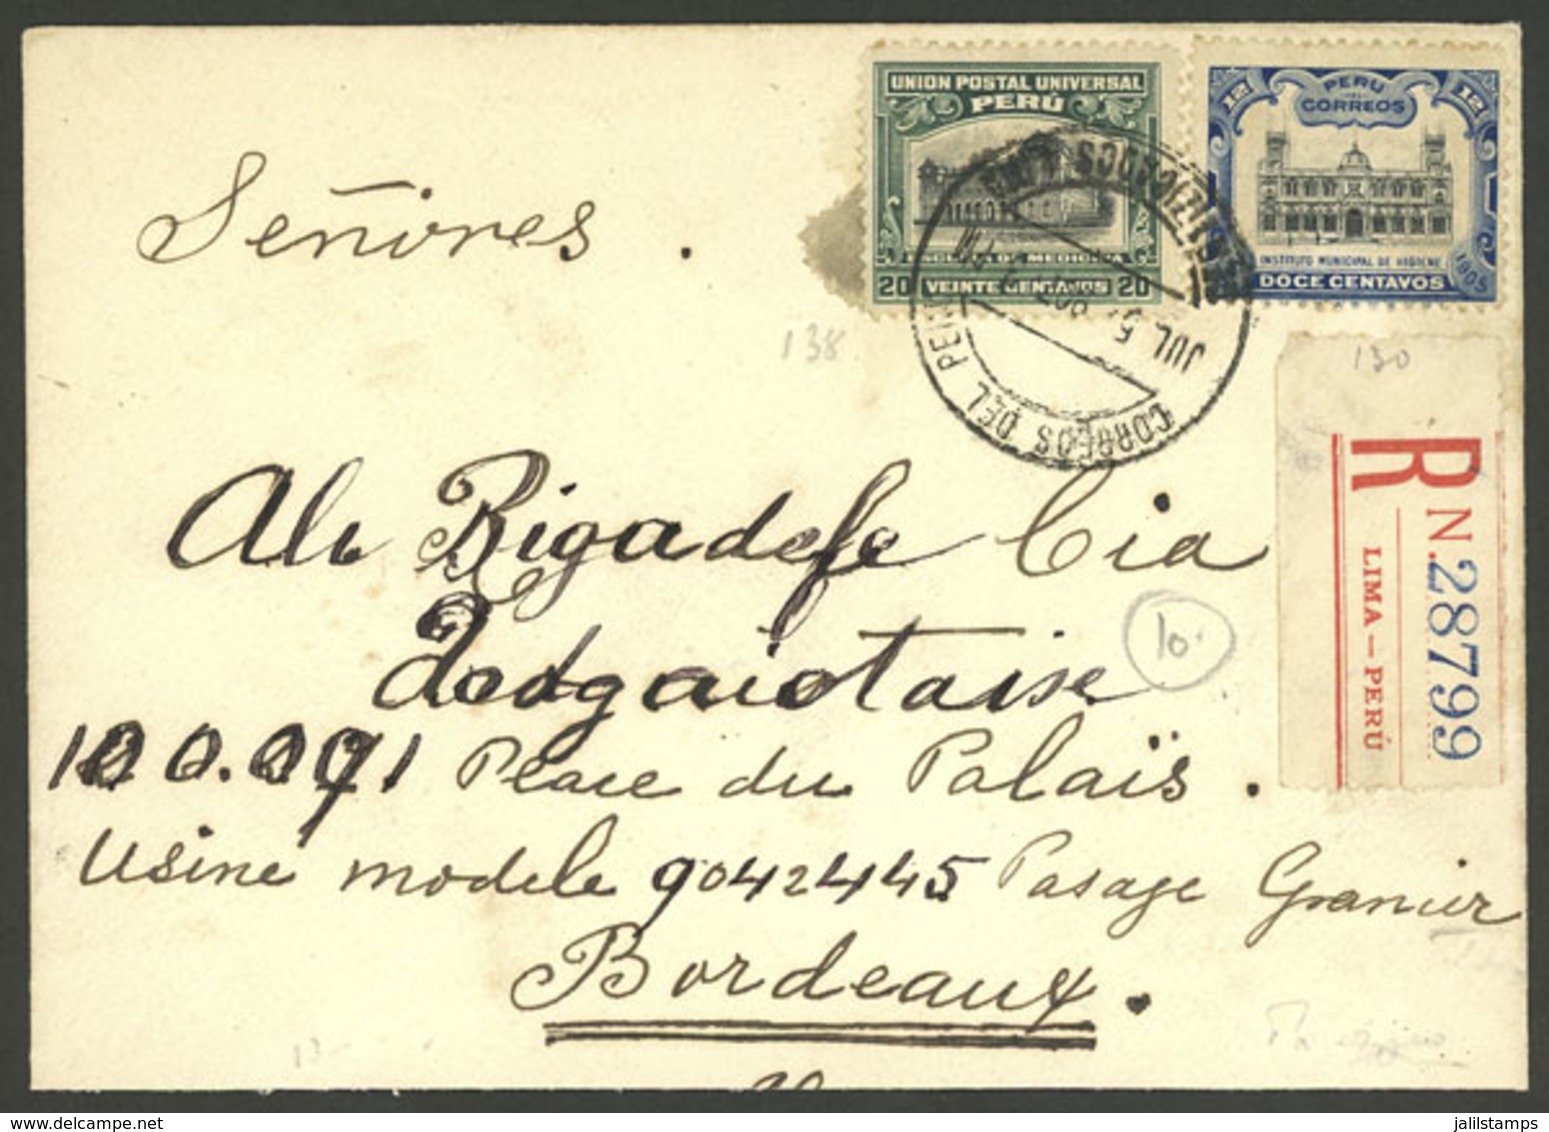 PERU: 5/JUL/1905 Lima - France, Registered Cover Franked With 32c. (10c. Registration Fee + 22c. Postage), Very Nice! - Peru